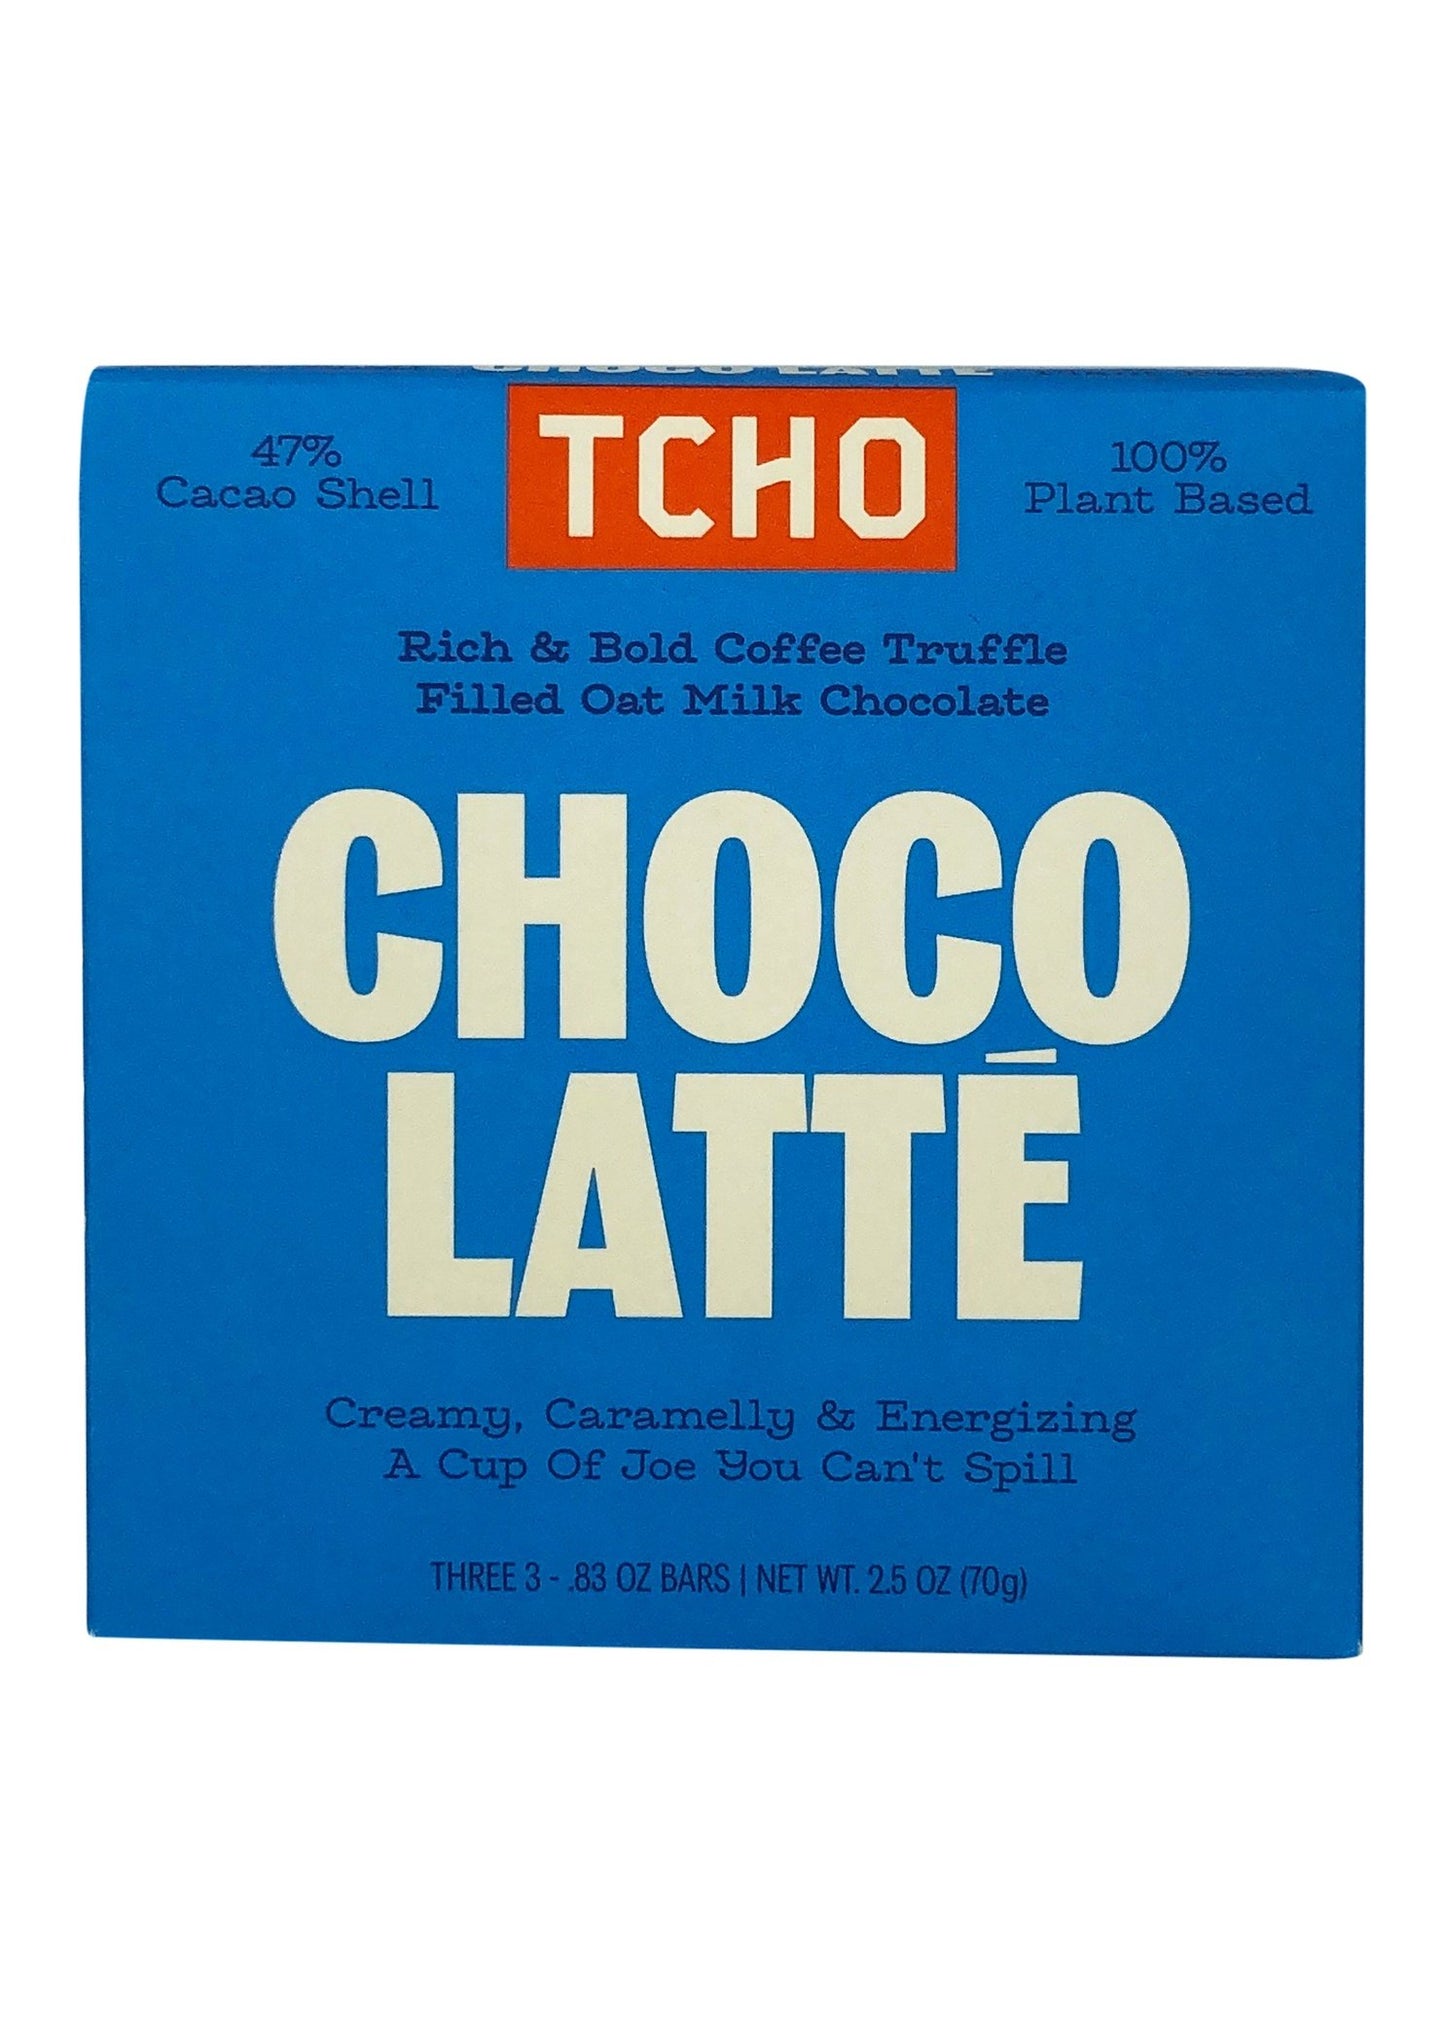 TCHO Choco Latte Chocolate bar